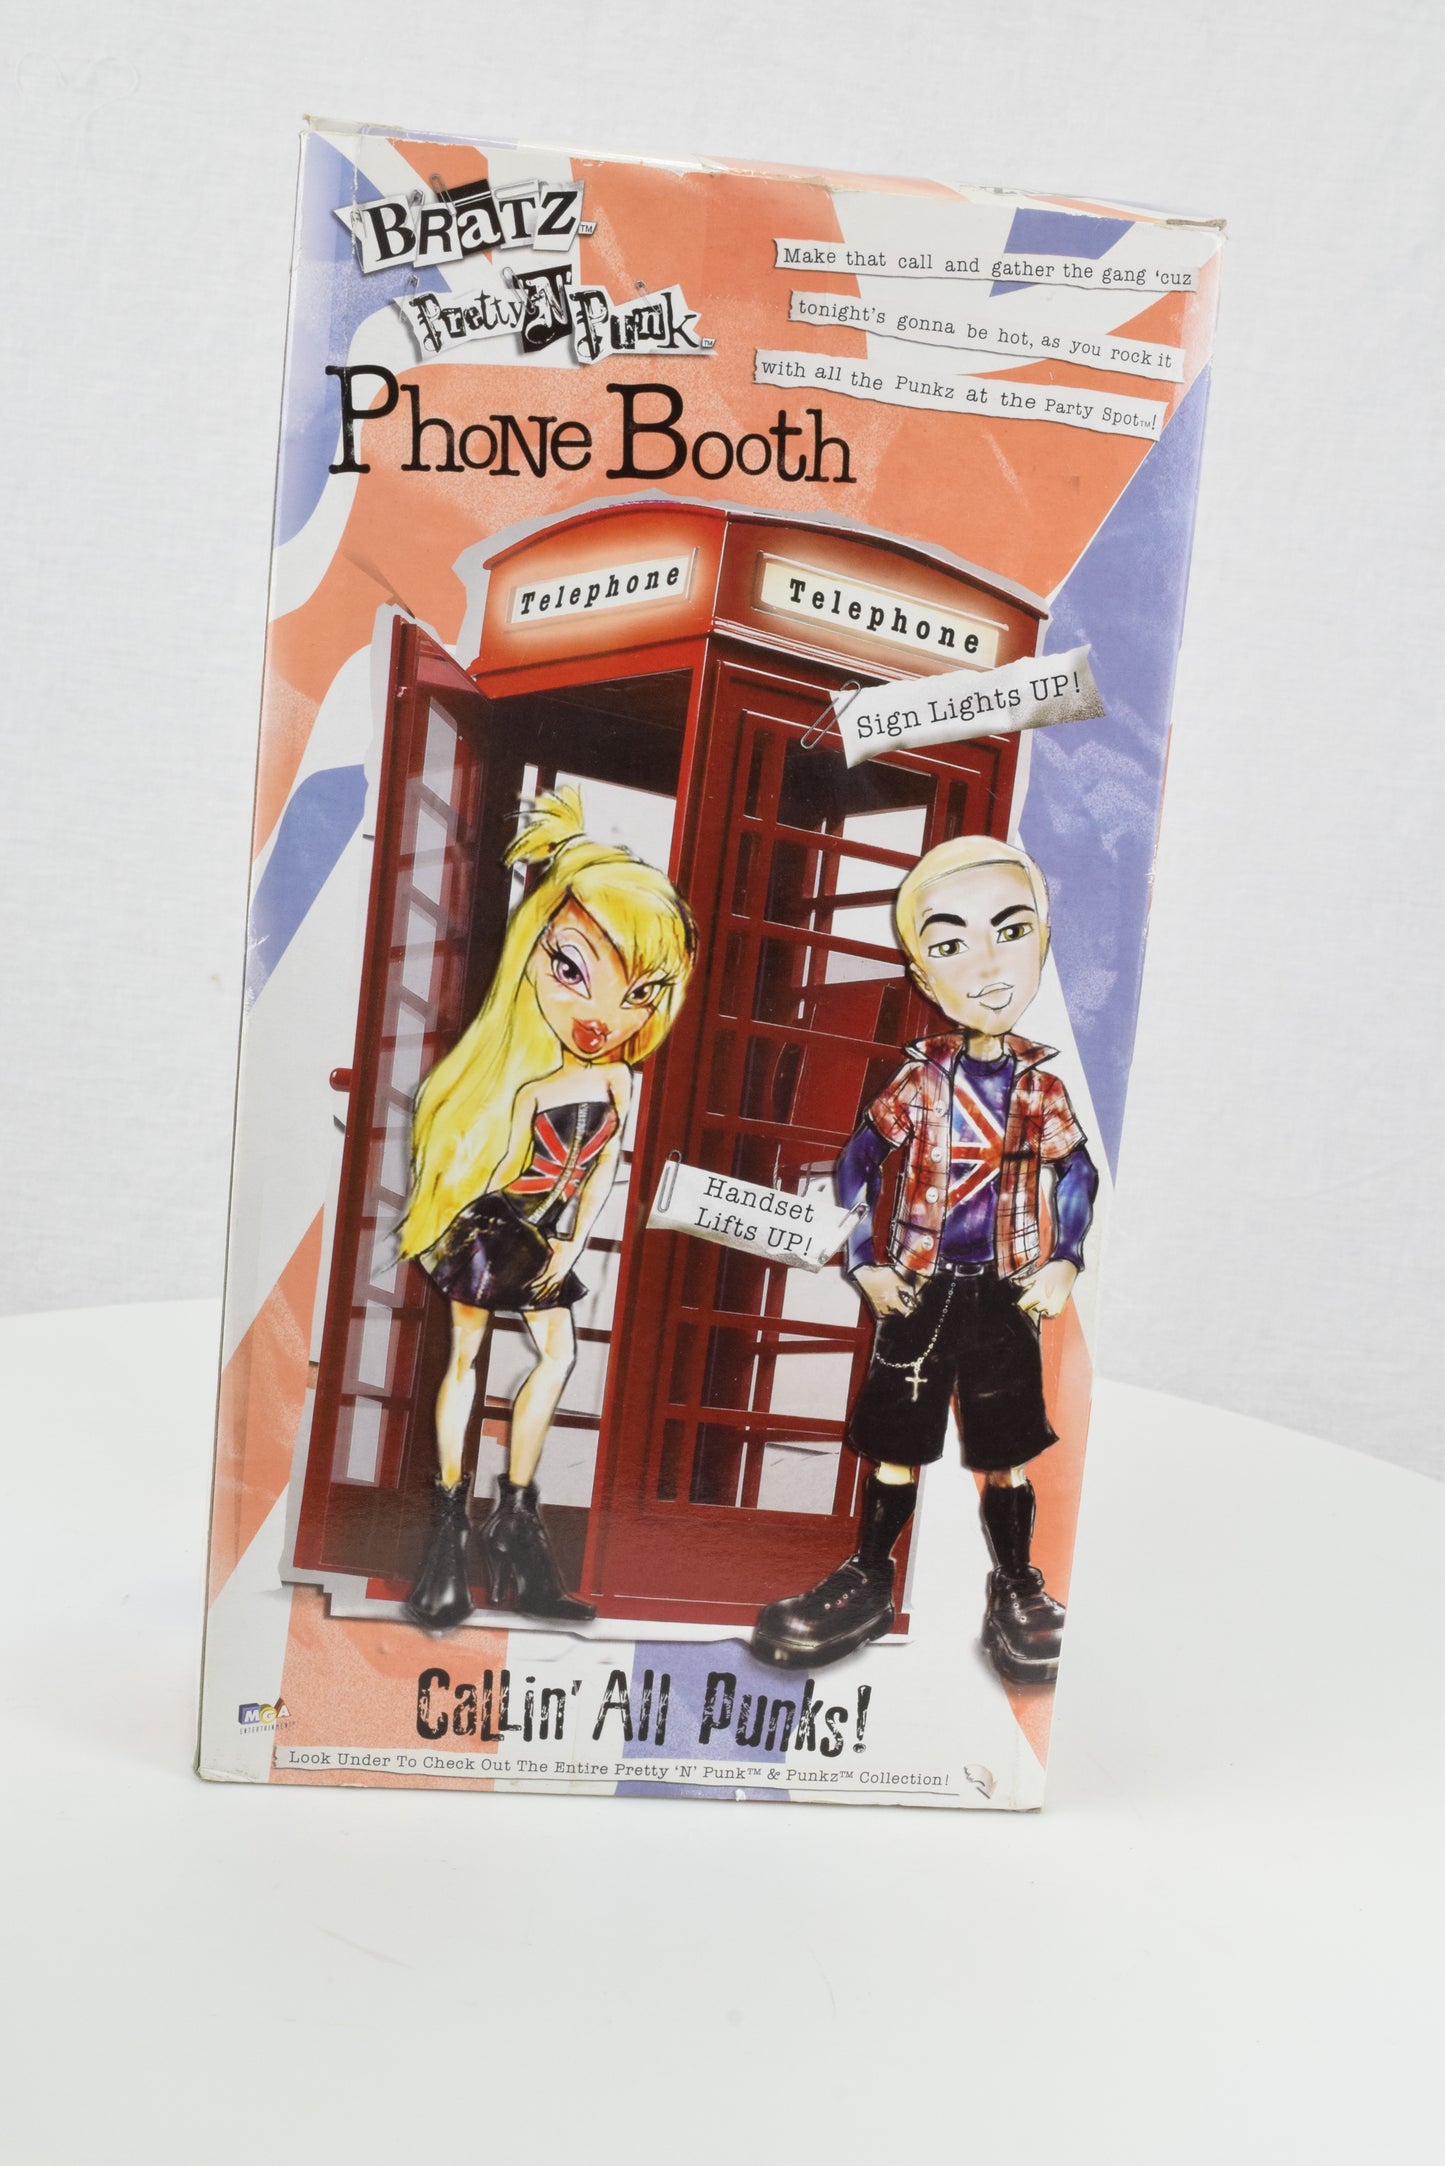 Bratz "Pretty N Punk" London Phone Booth